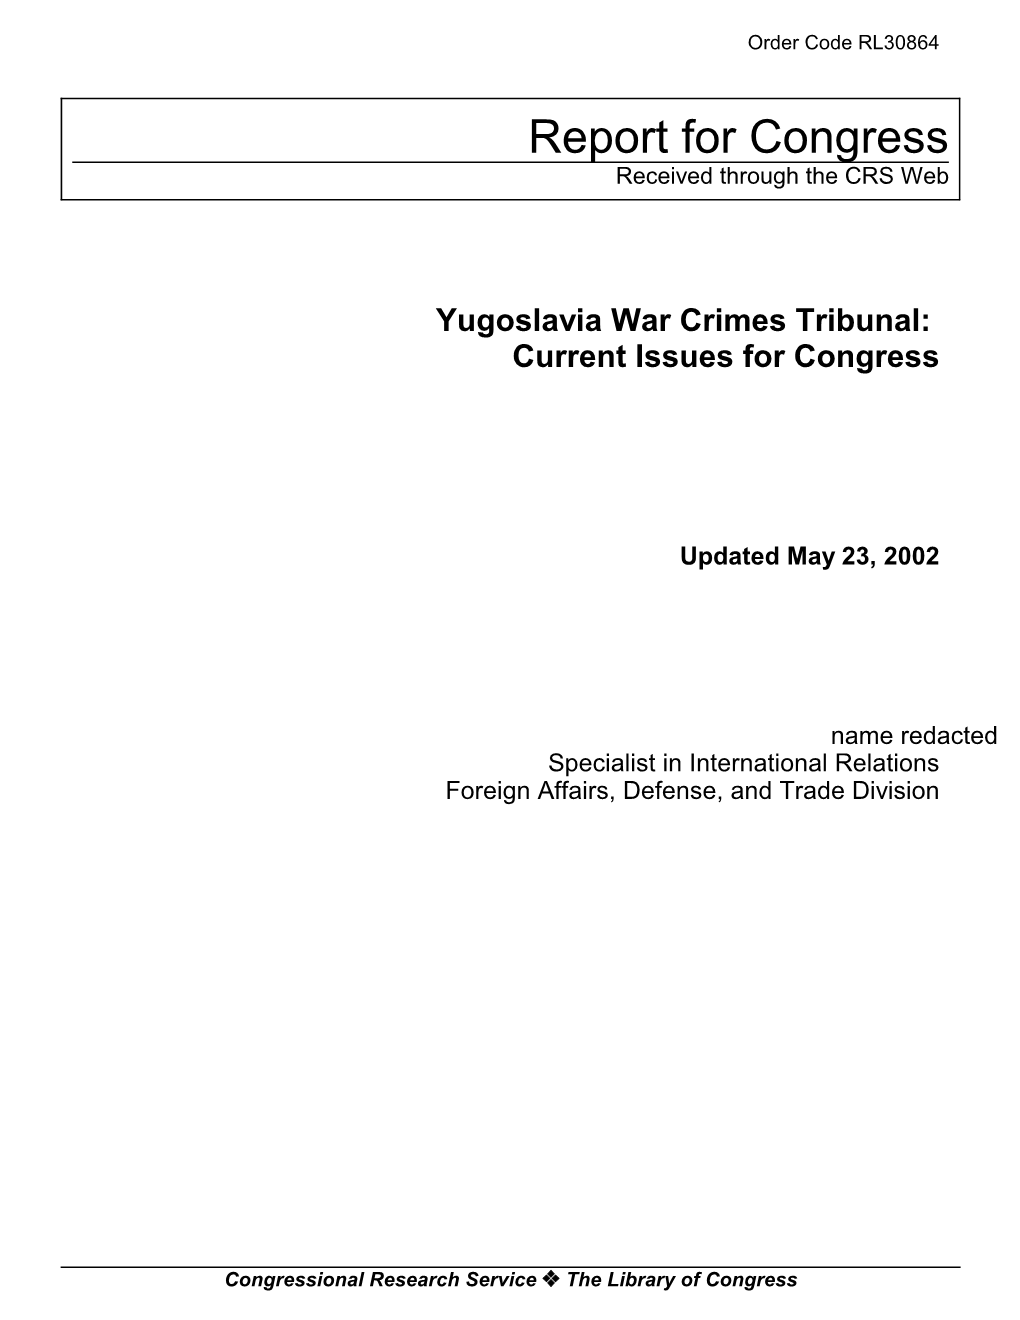 Yugoslavia War Crimes Tribunal: Current Issues for Congress